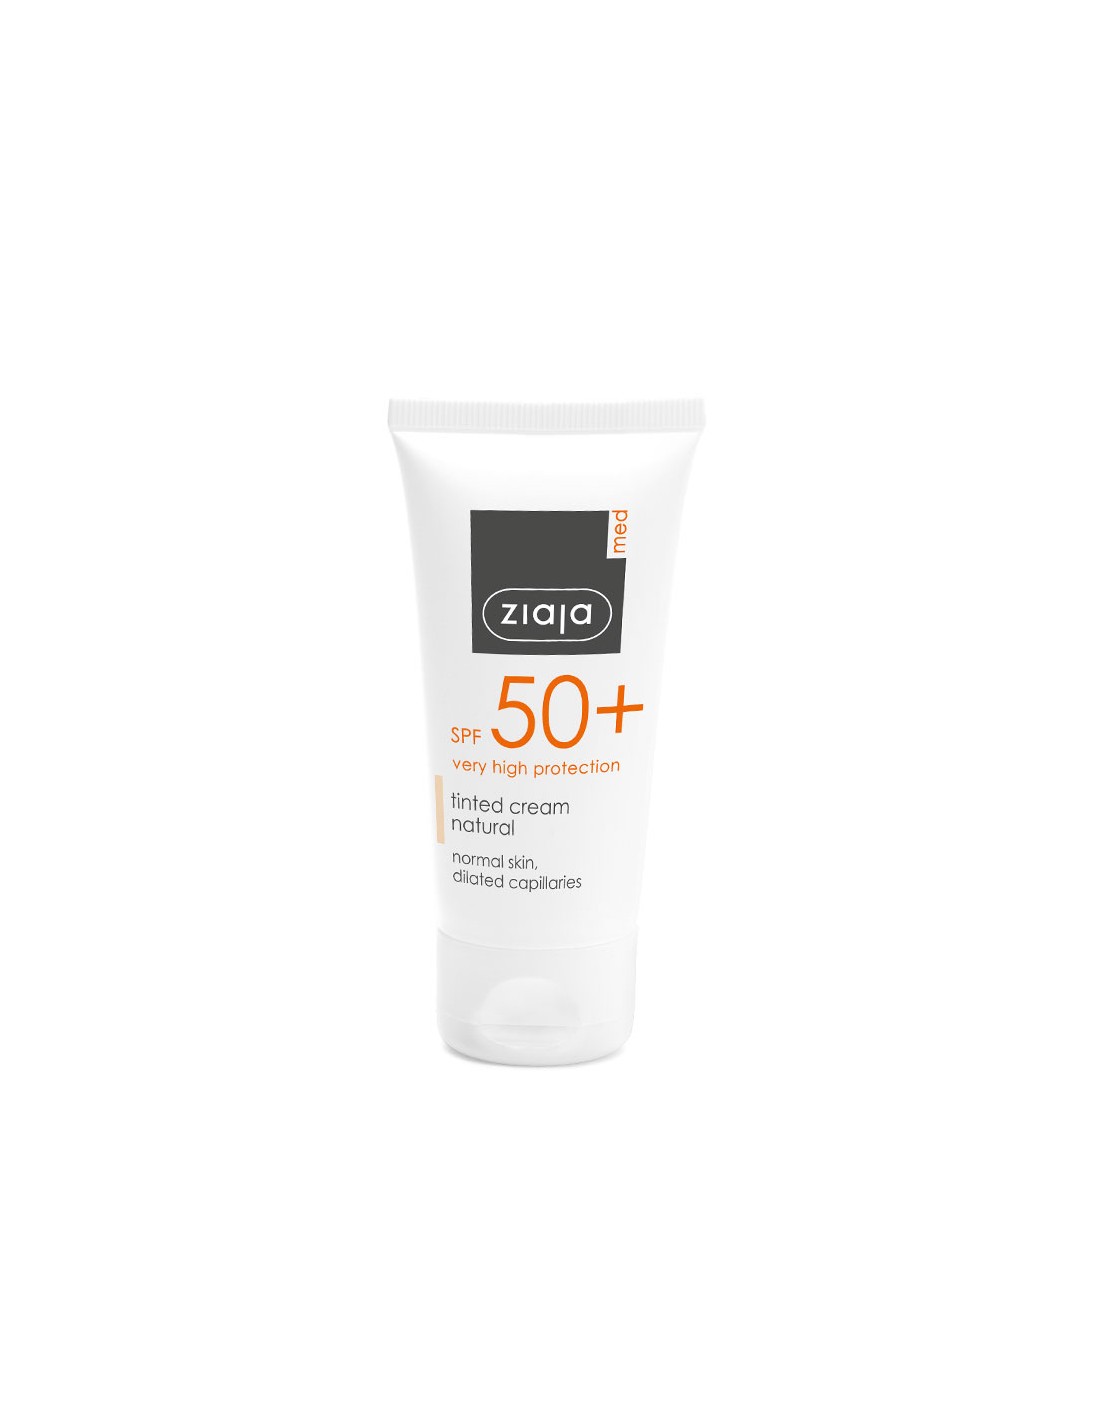 SPF 50+ Crema facial protectora con color natural - ZIAJA MED